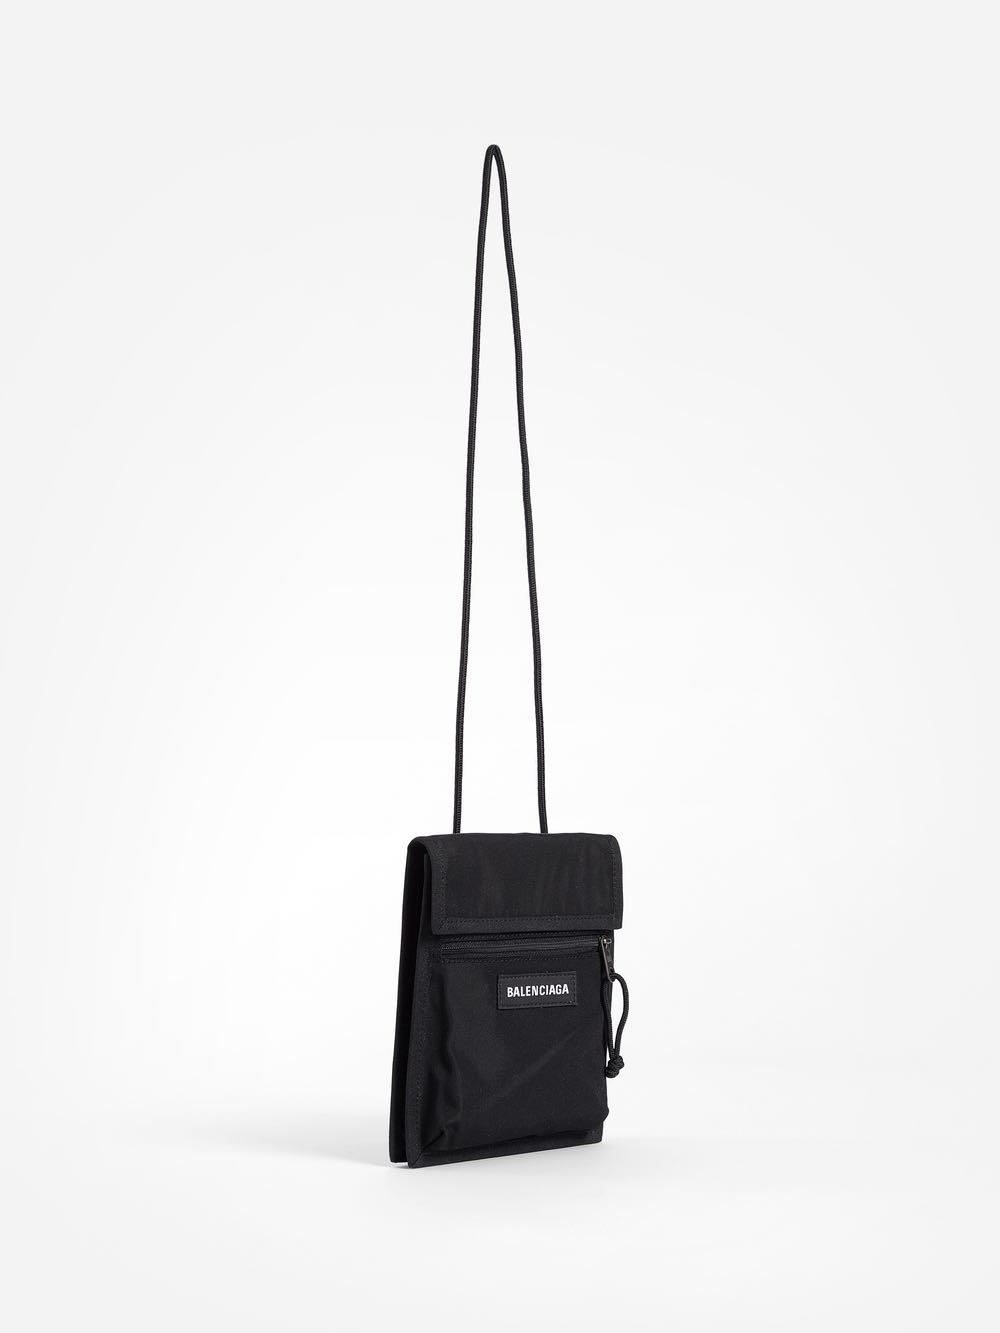 Balenciaga Wheel Sling Embroidered Shell Shoulder Bag In Black